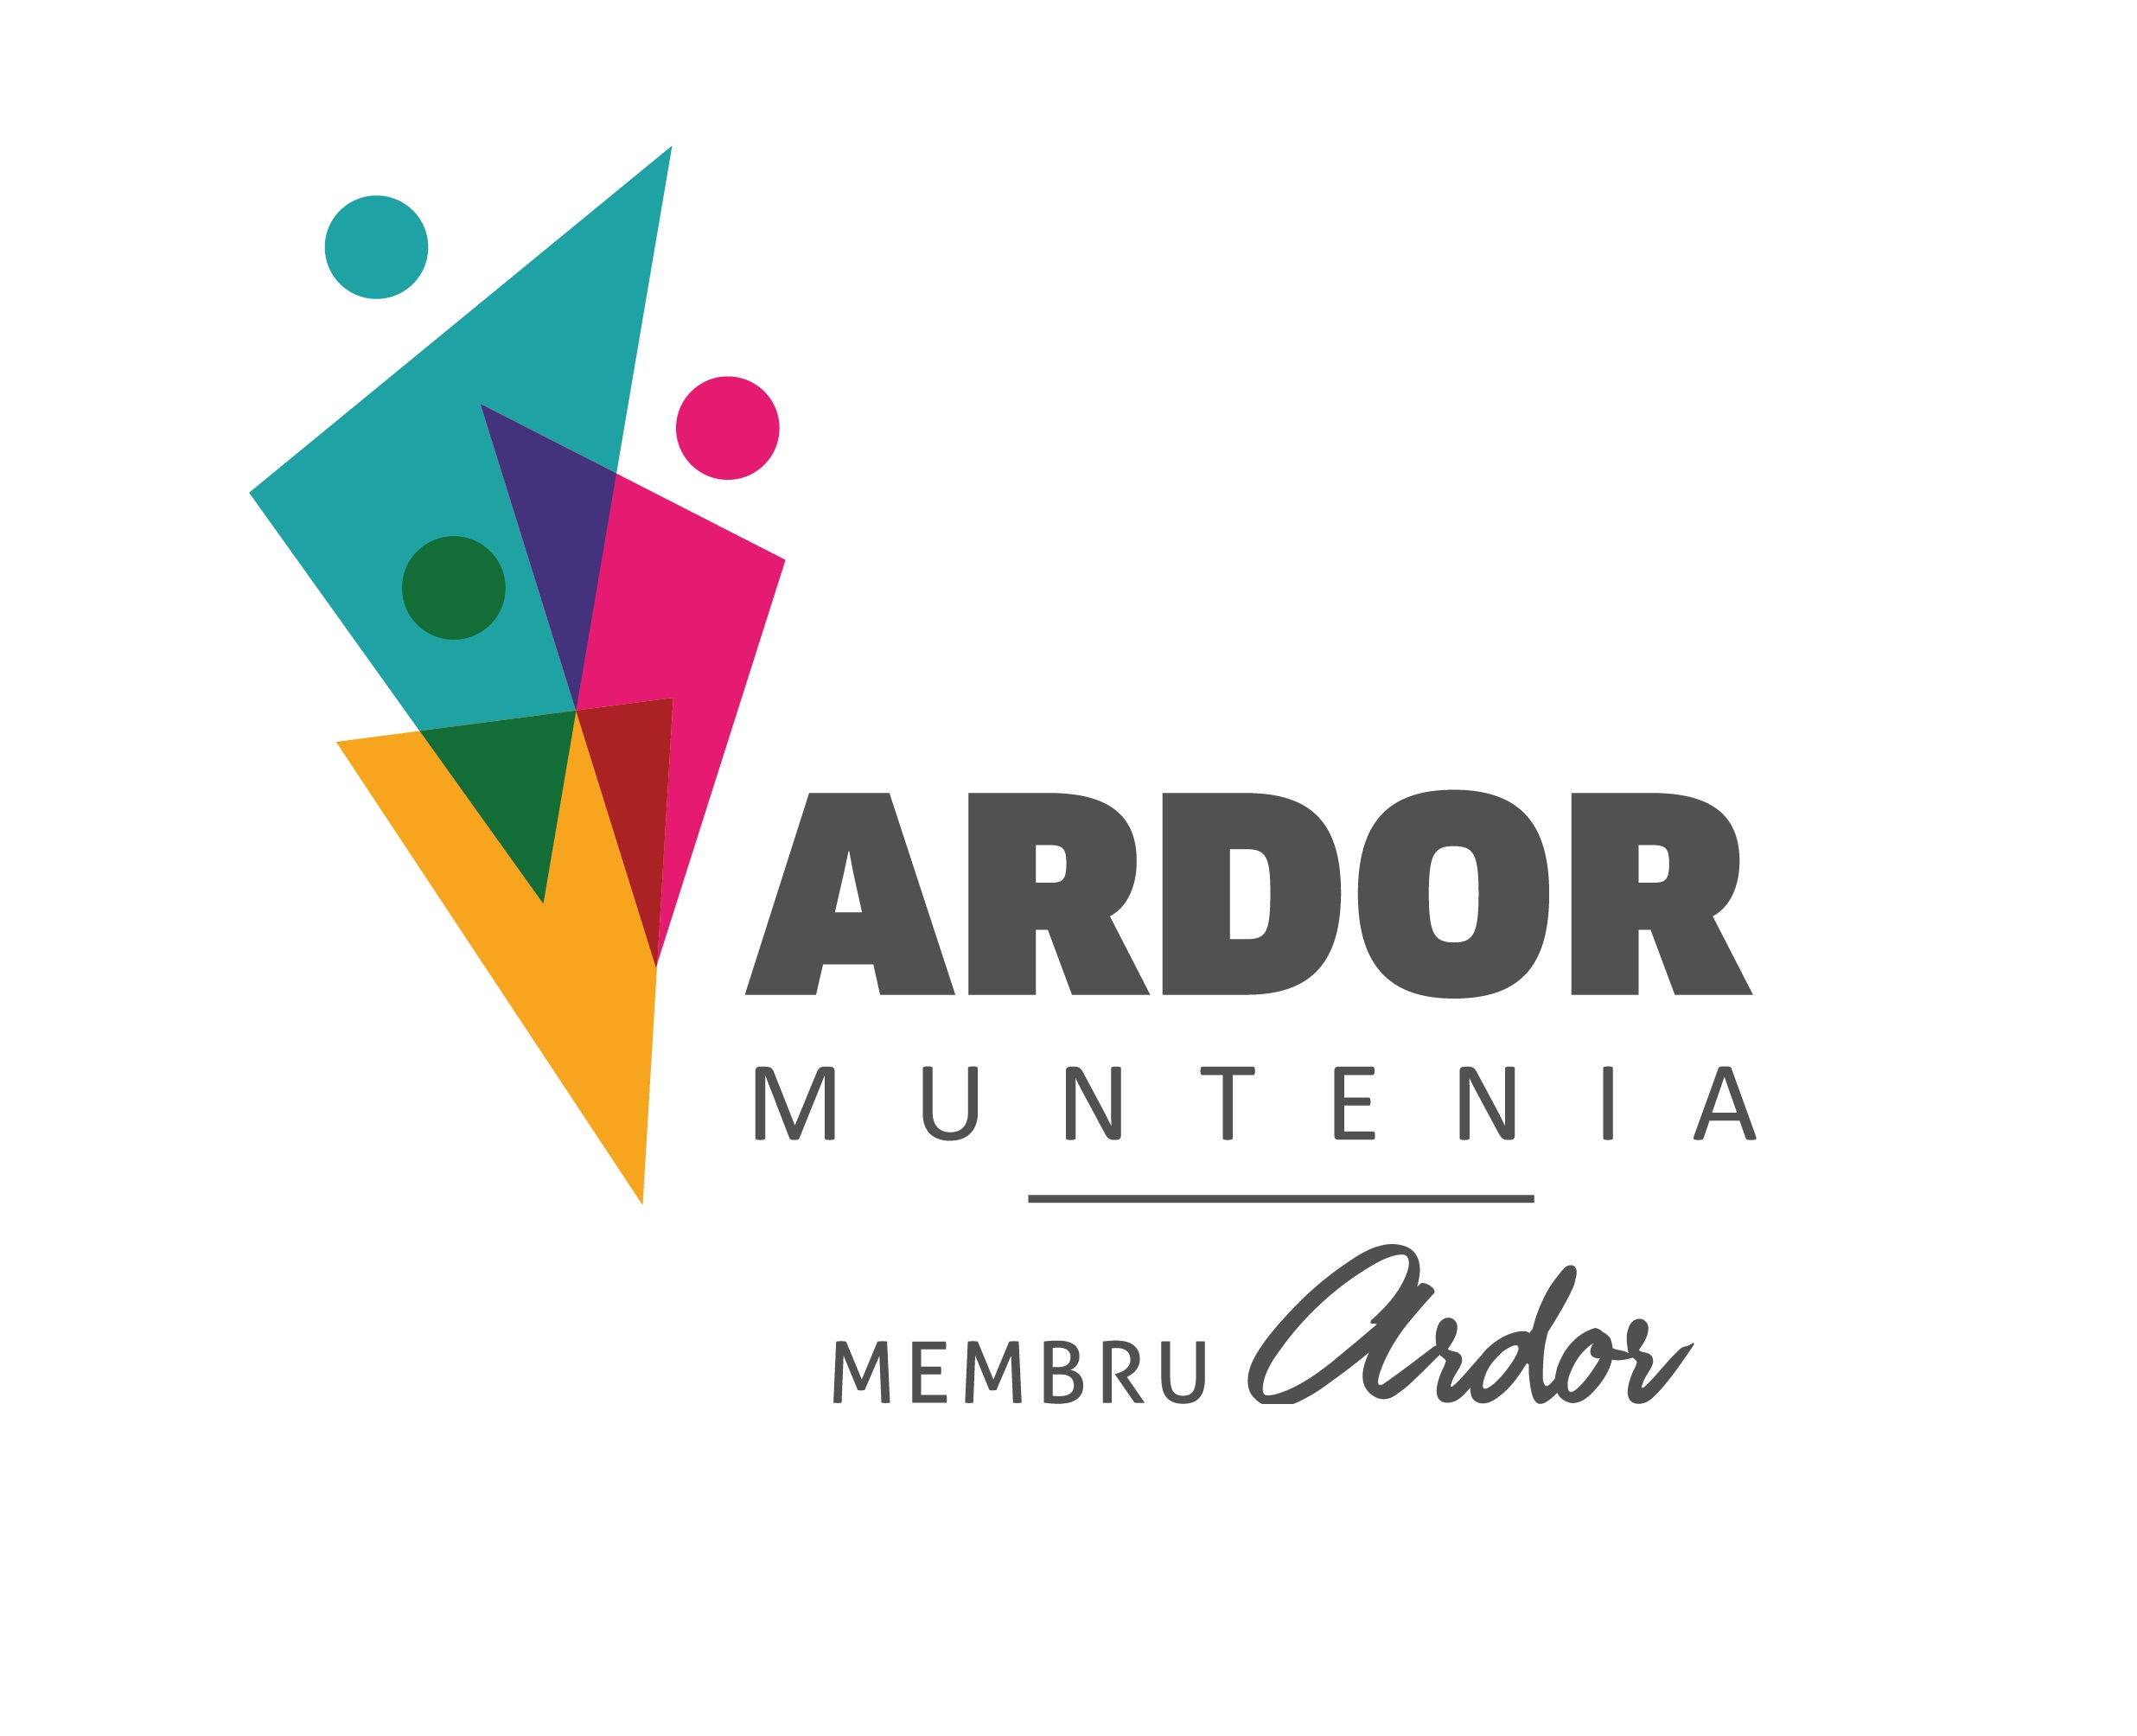 ARDOR Muntenia logo